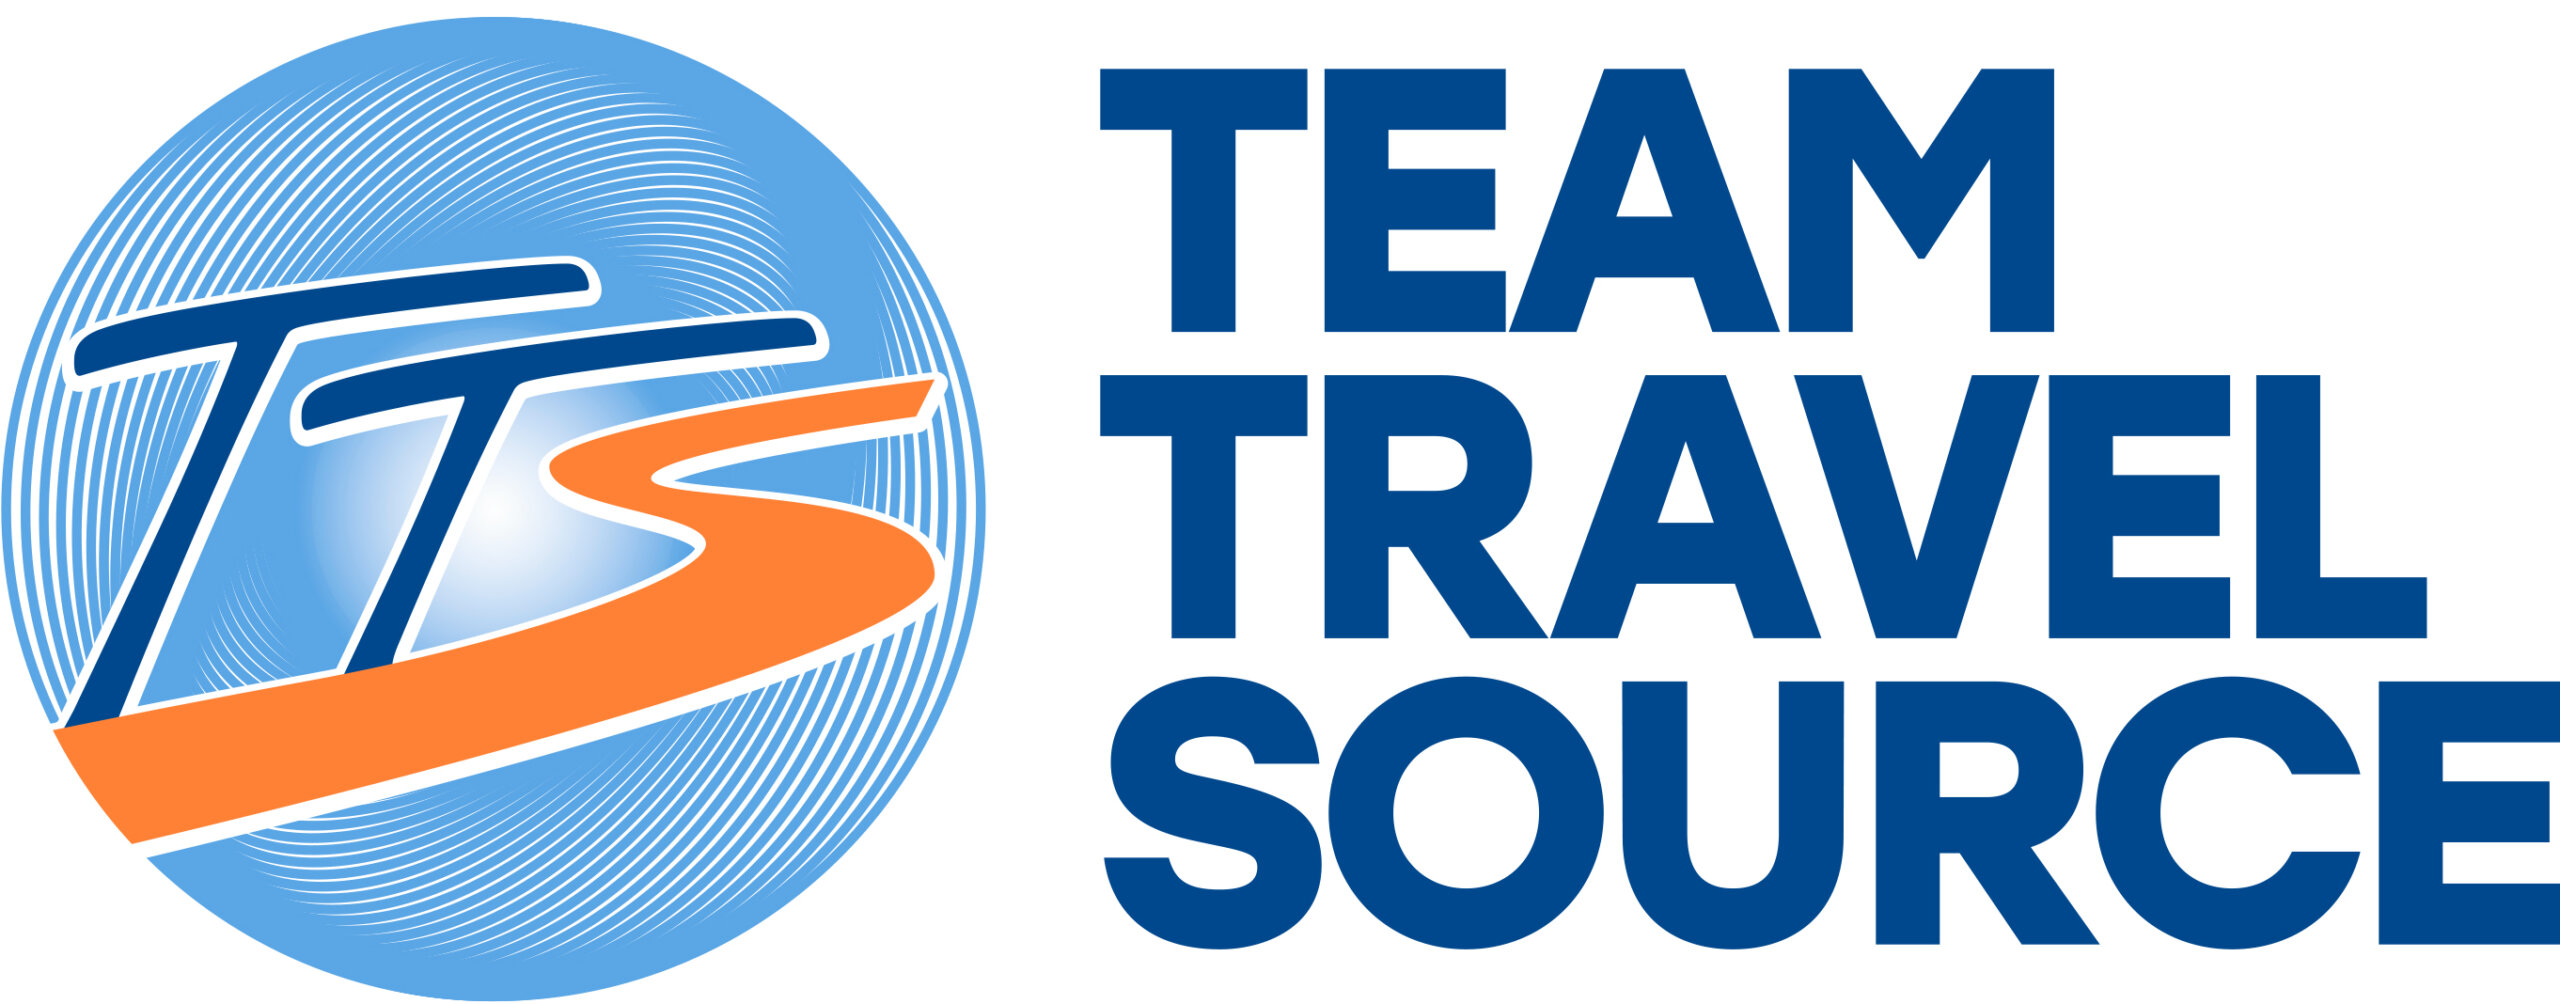 TTS New Logo 4-21